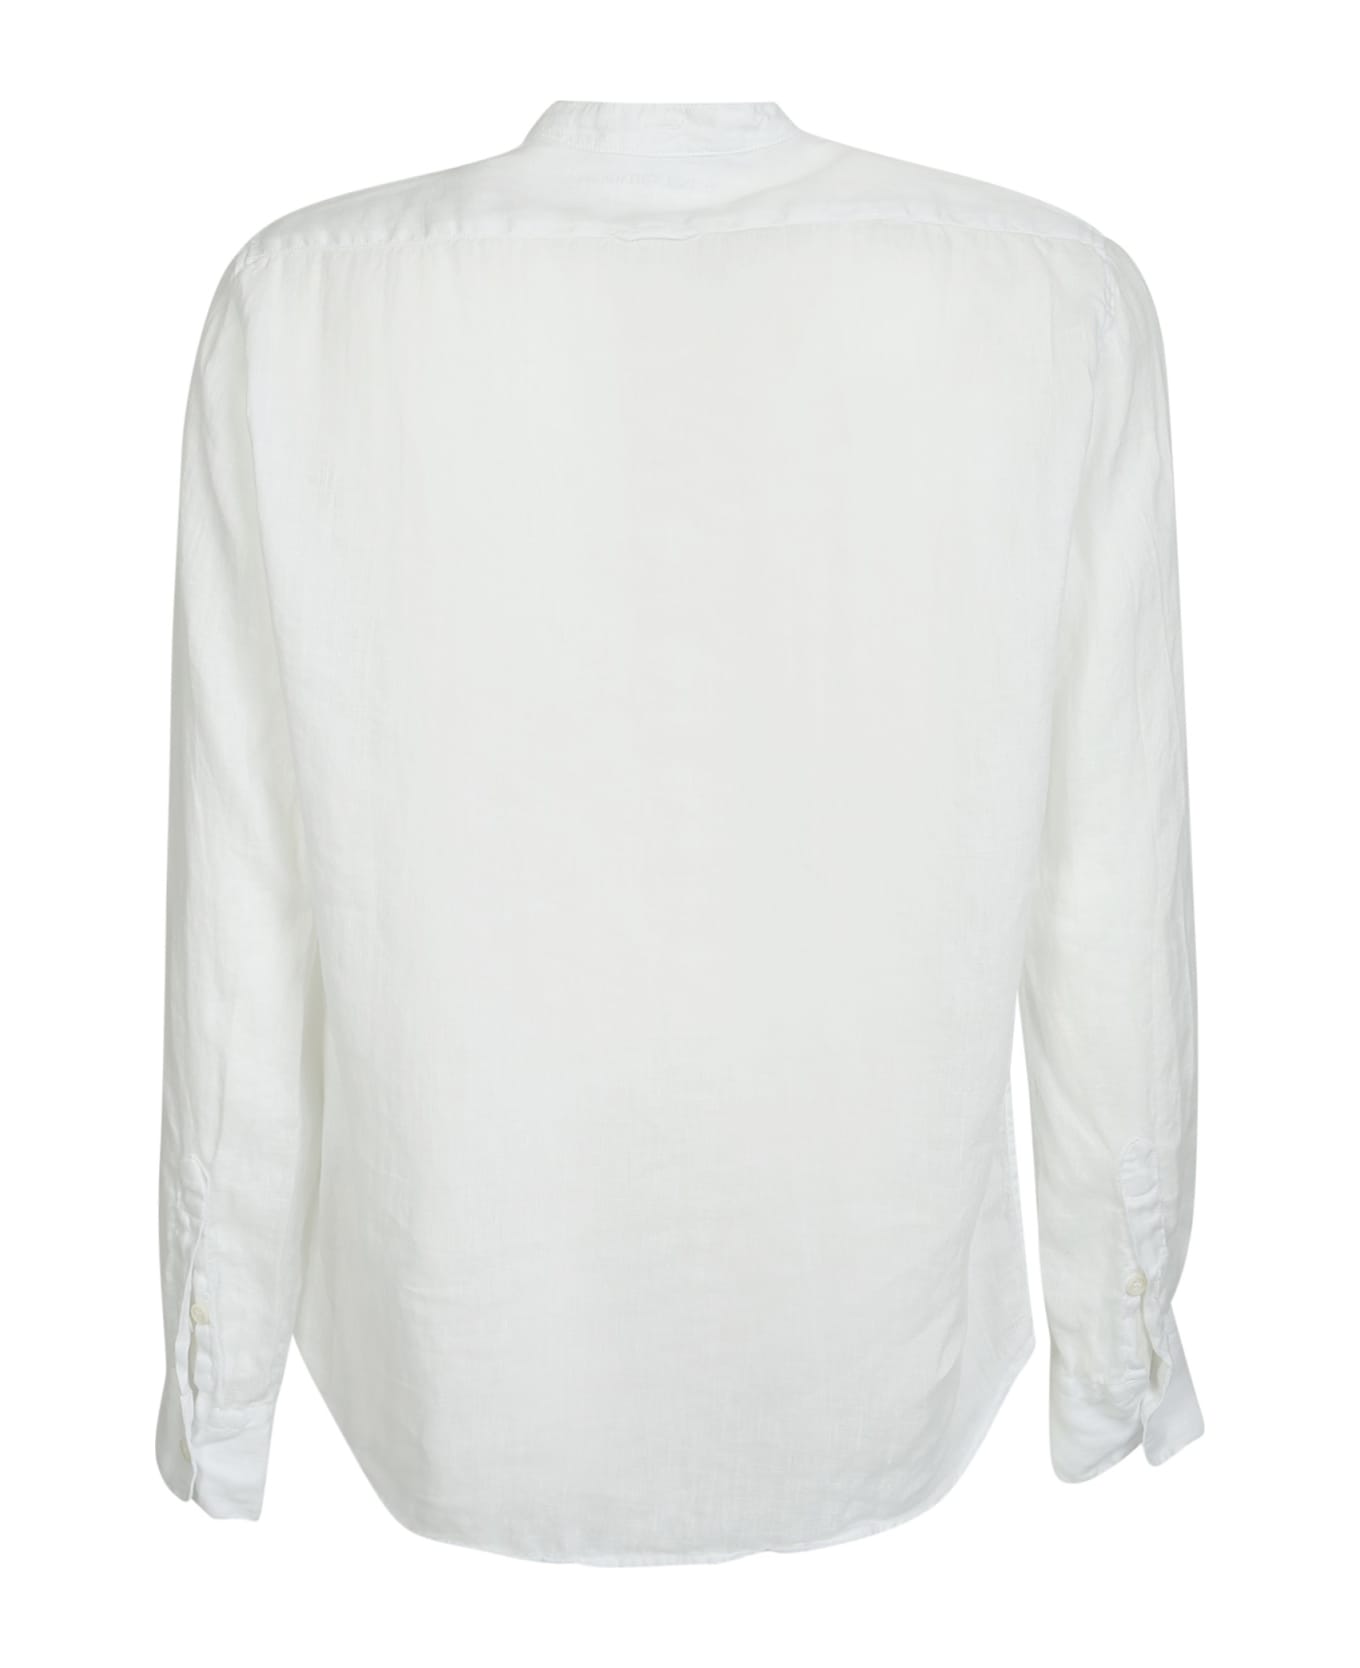 Original Vintage Style Linen Shirt - White シャツ